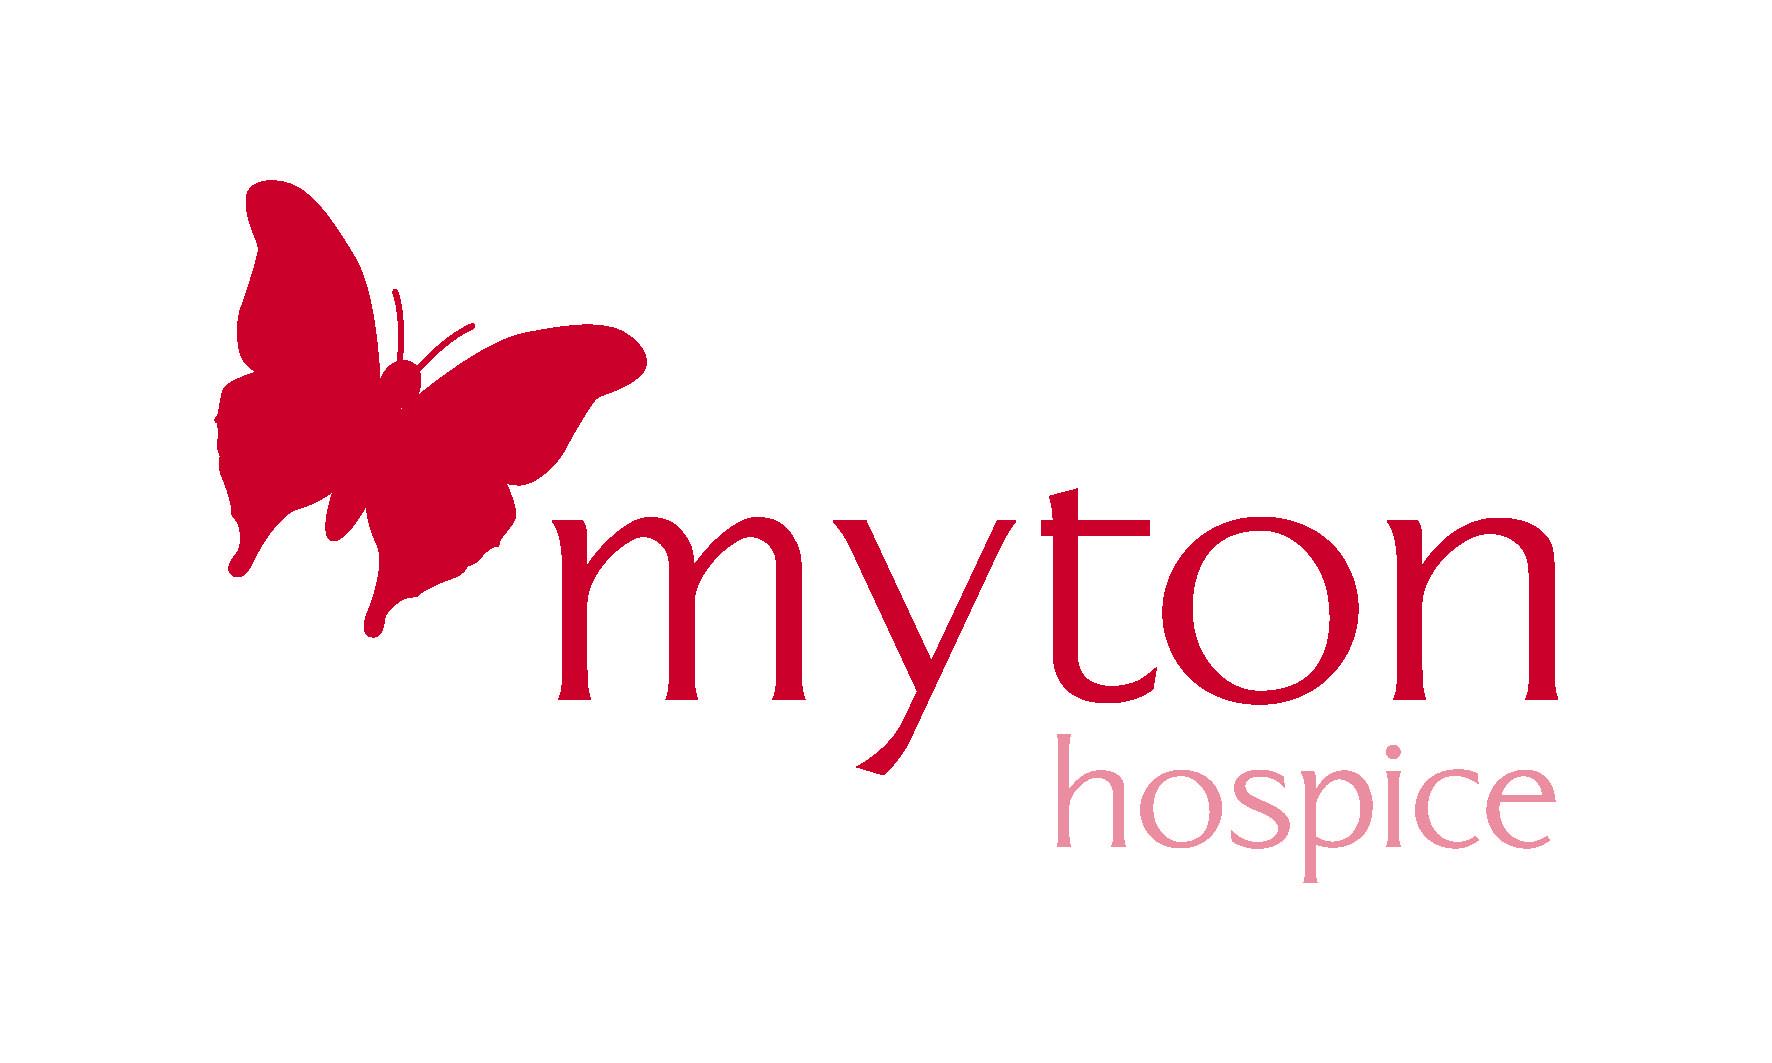 Myton Hospice